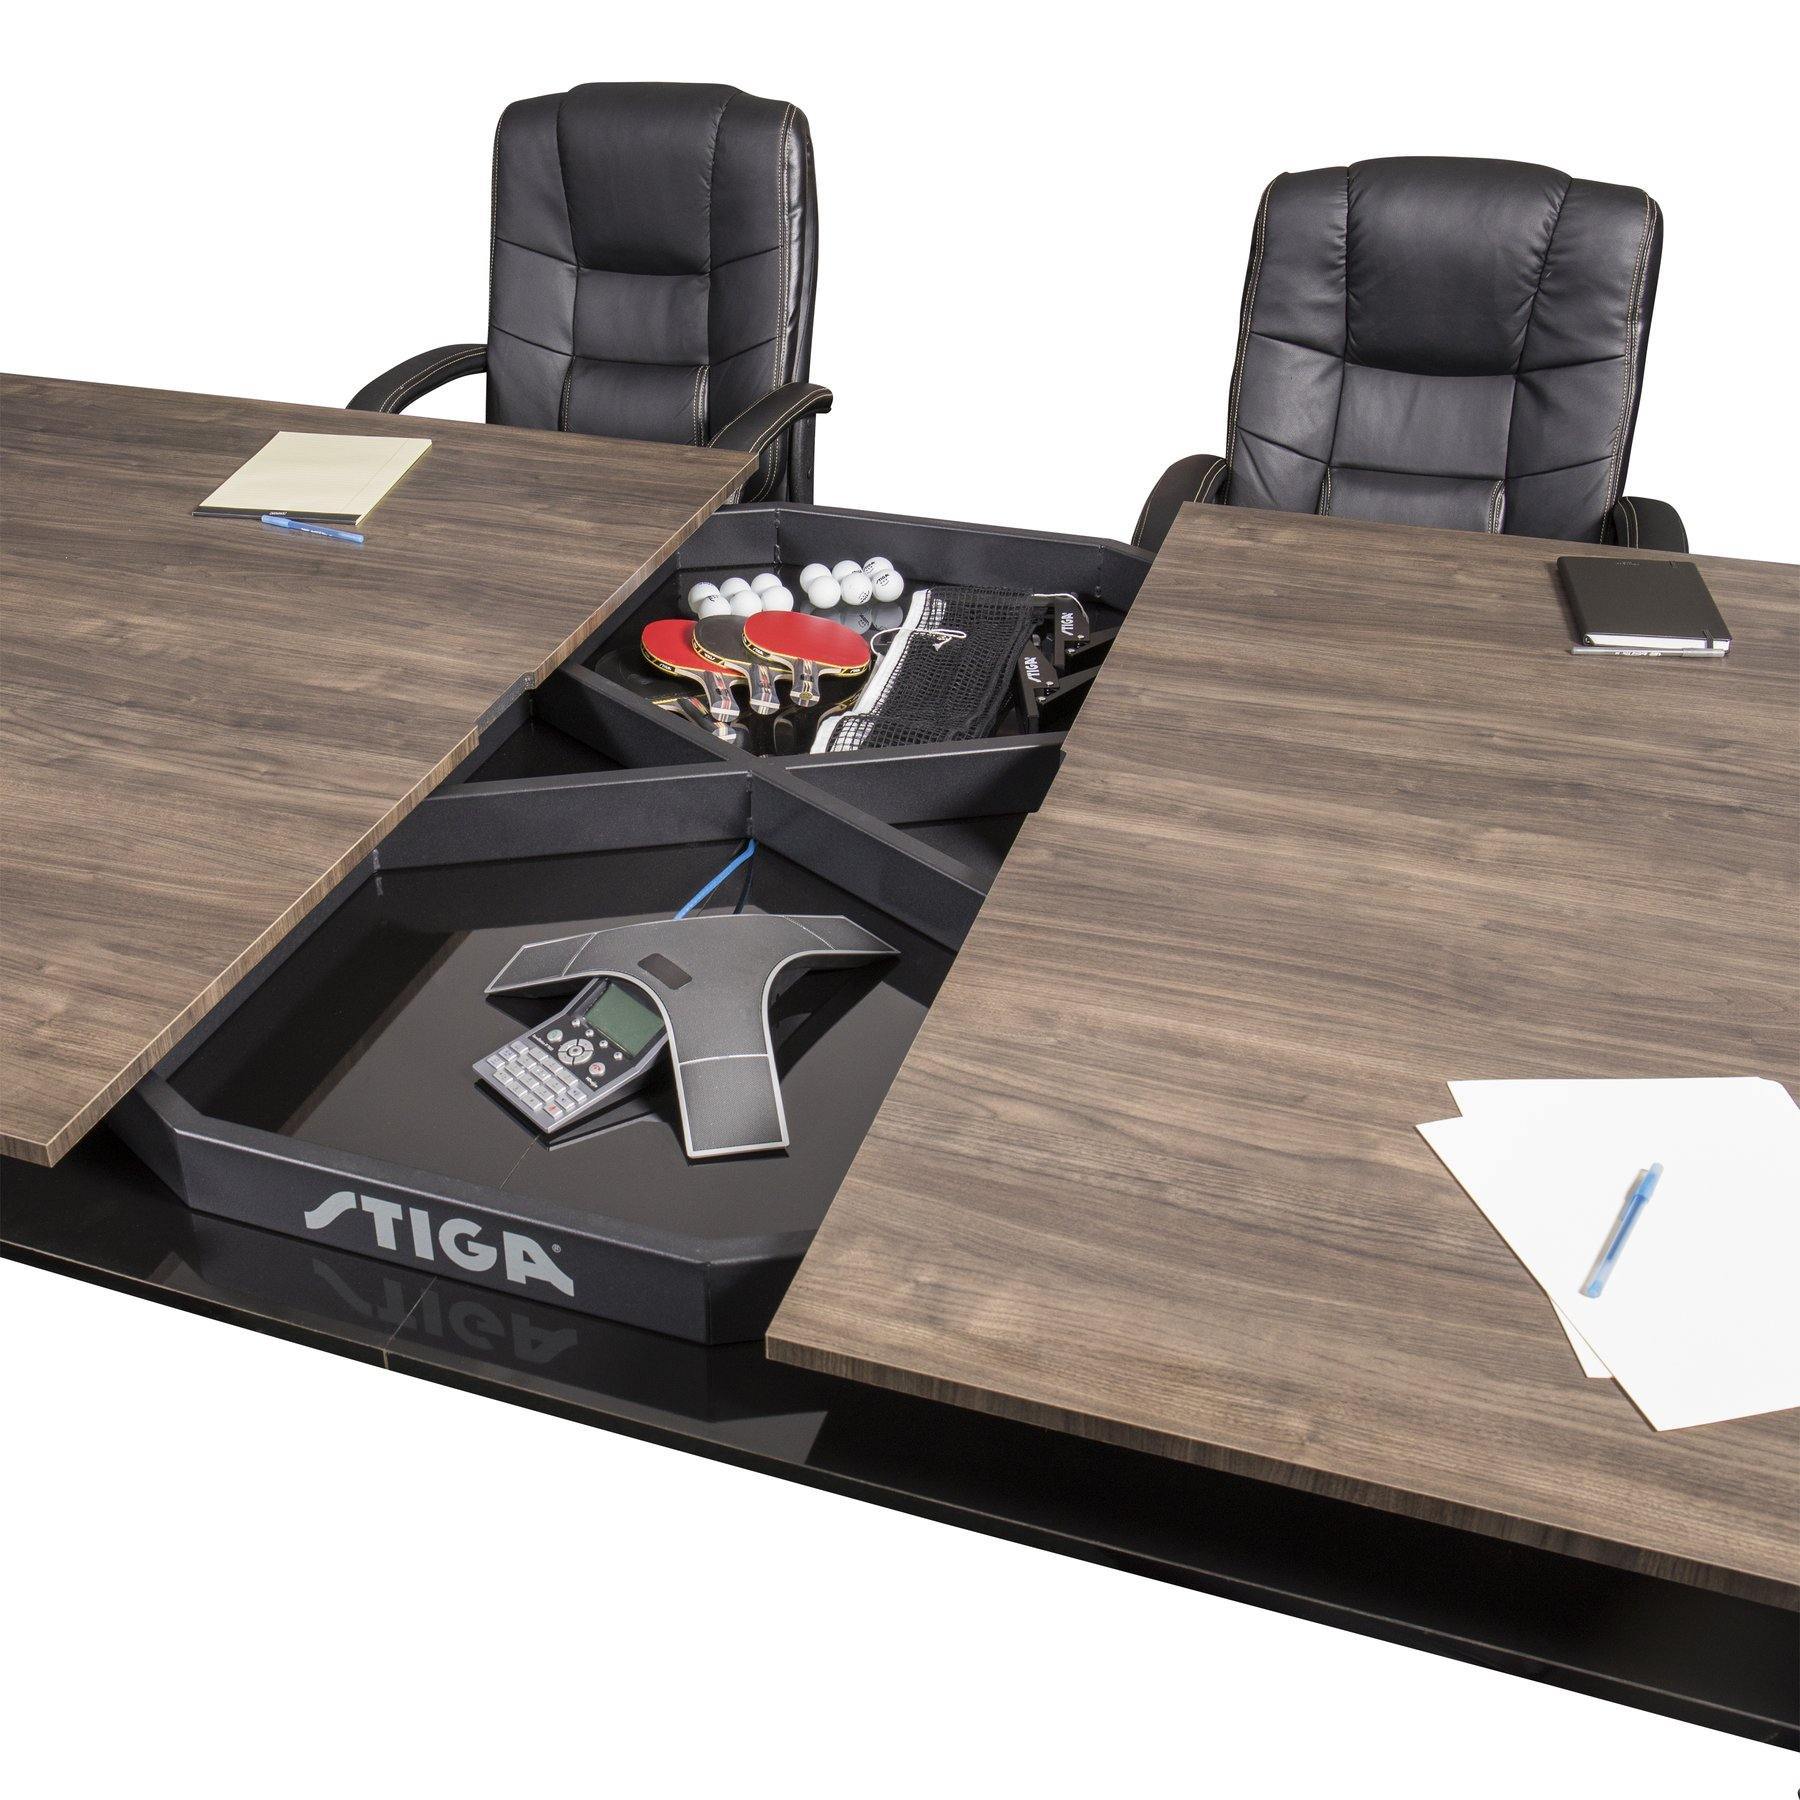 Stiga Conference Table STIGA - Hybrid Dining/Conference/TT Table Black - T8591B